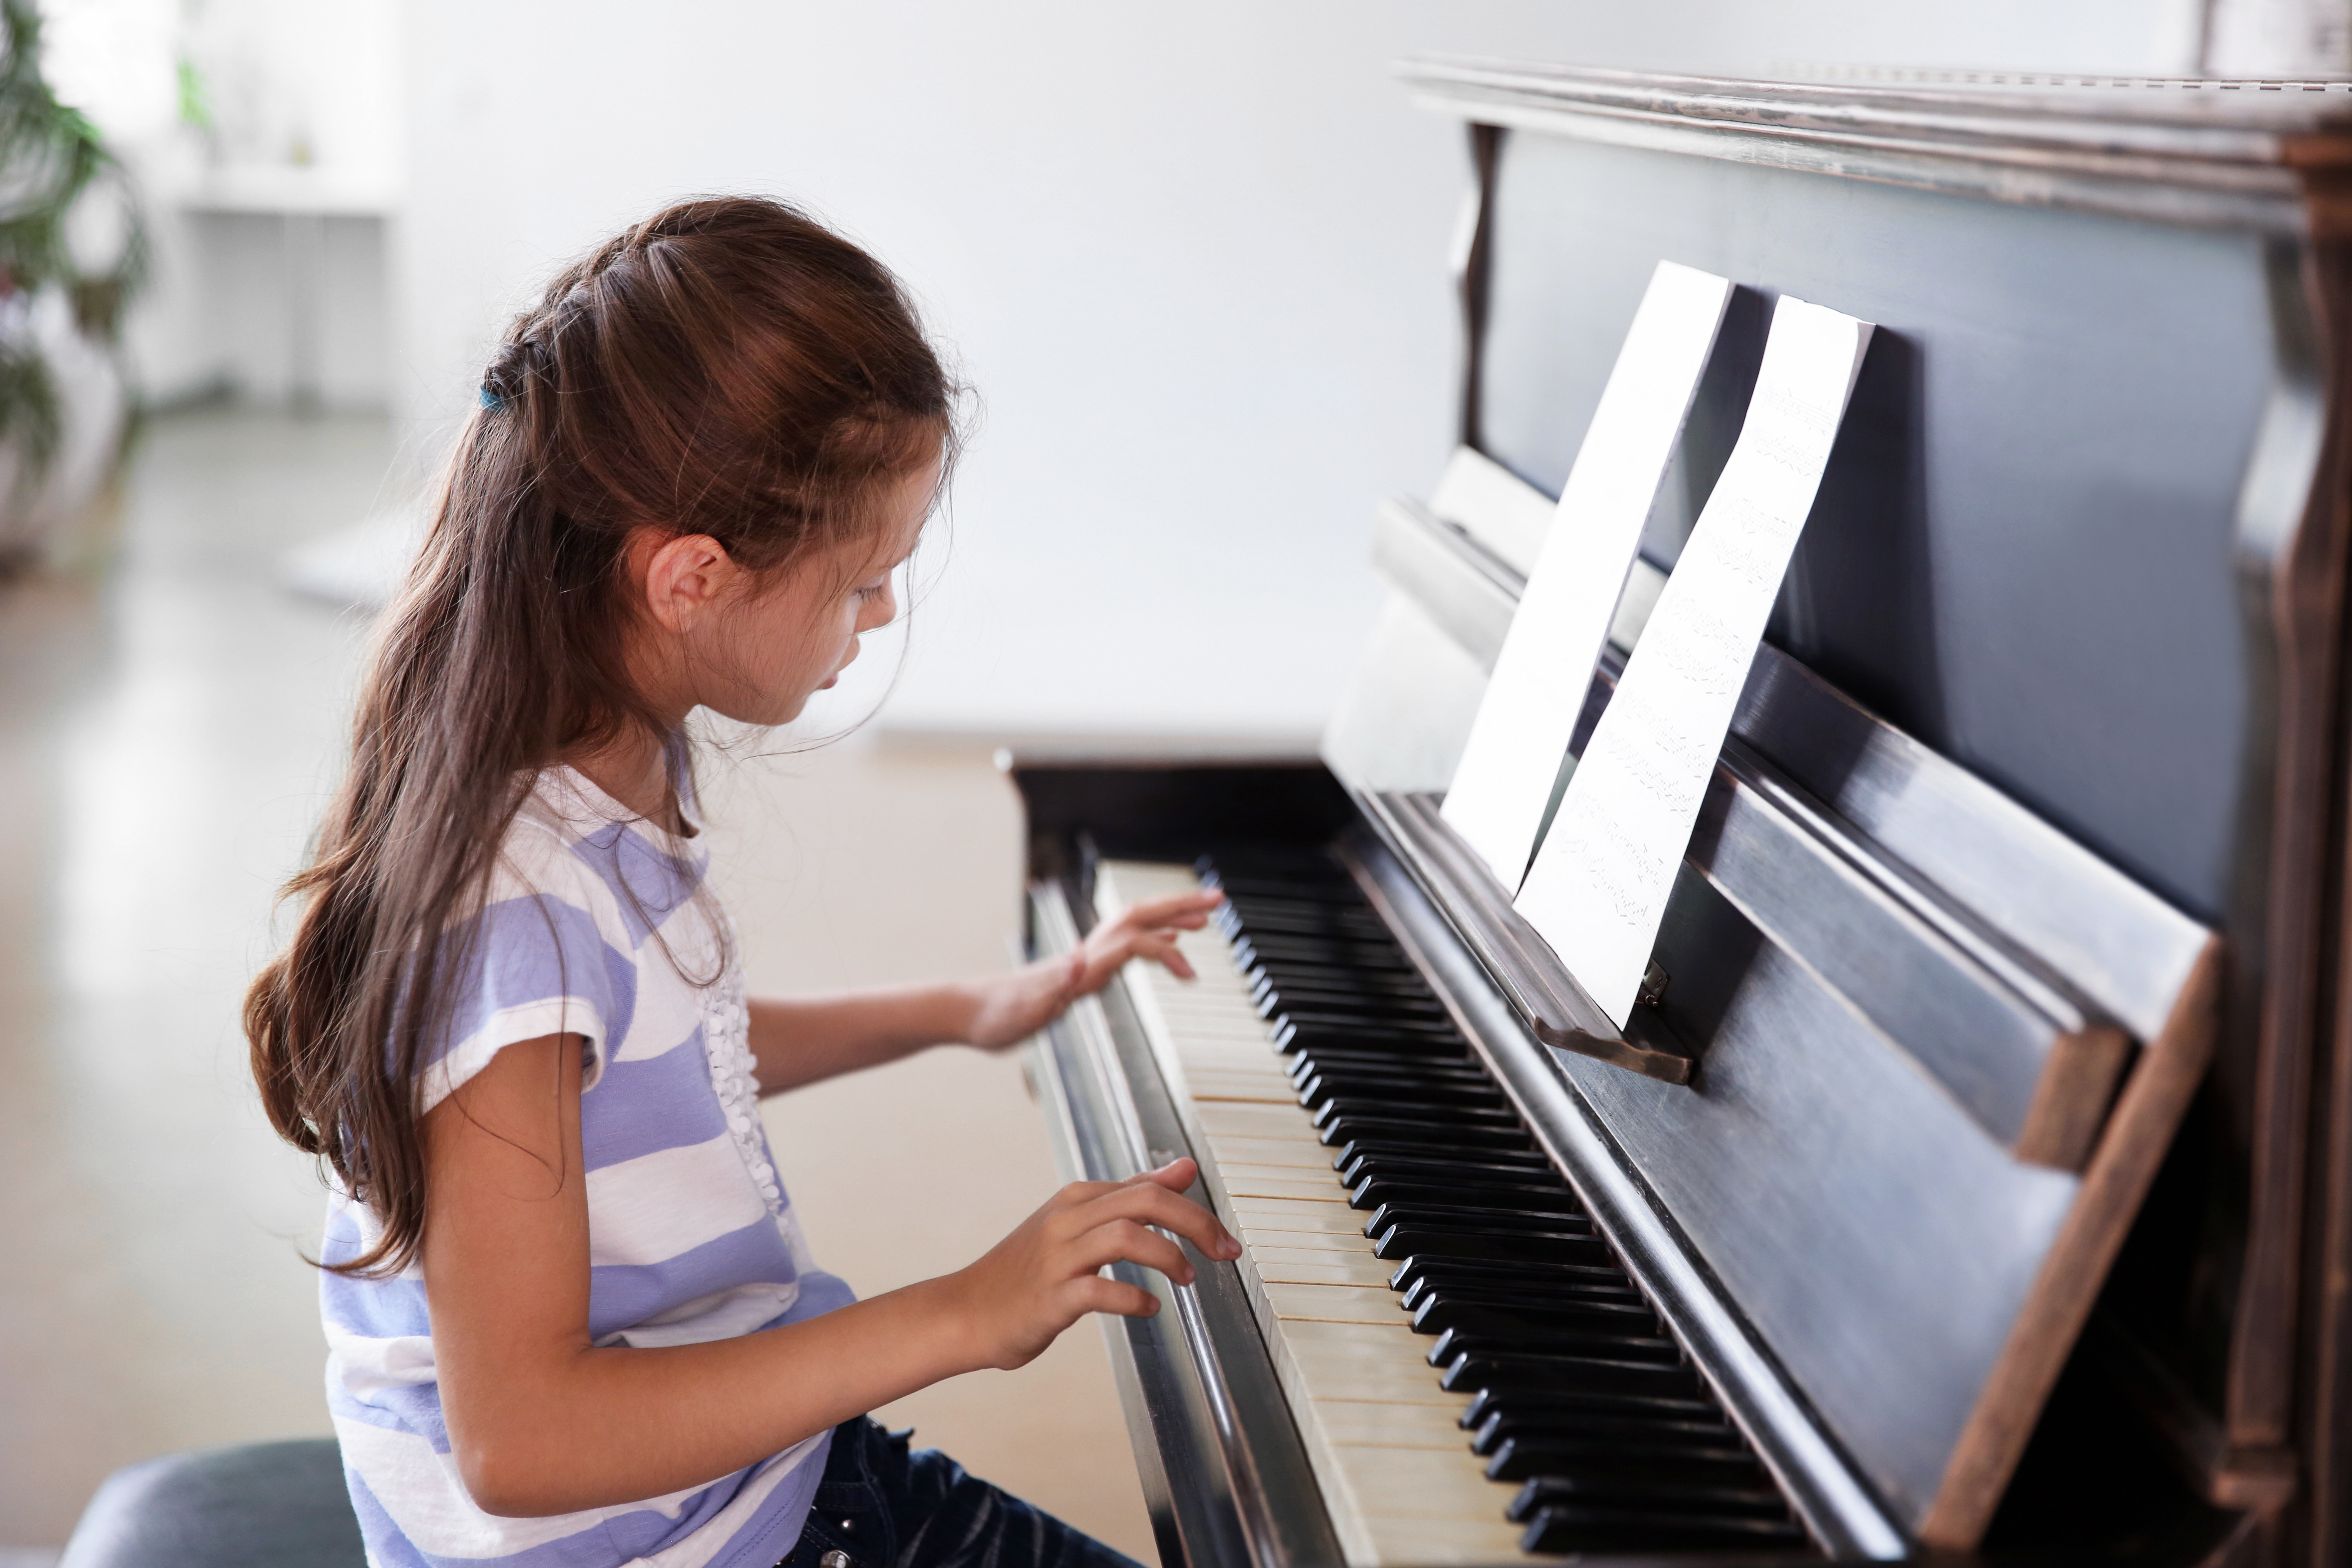 She play piano well. Ребенок за фортепиано. Девушка и пианино. Фортепиано для детей. Игра на фортепьяно.